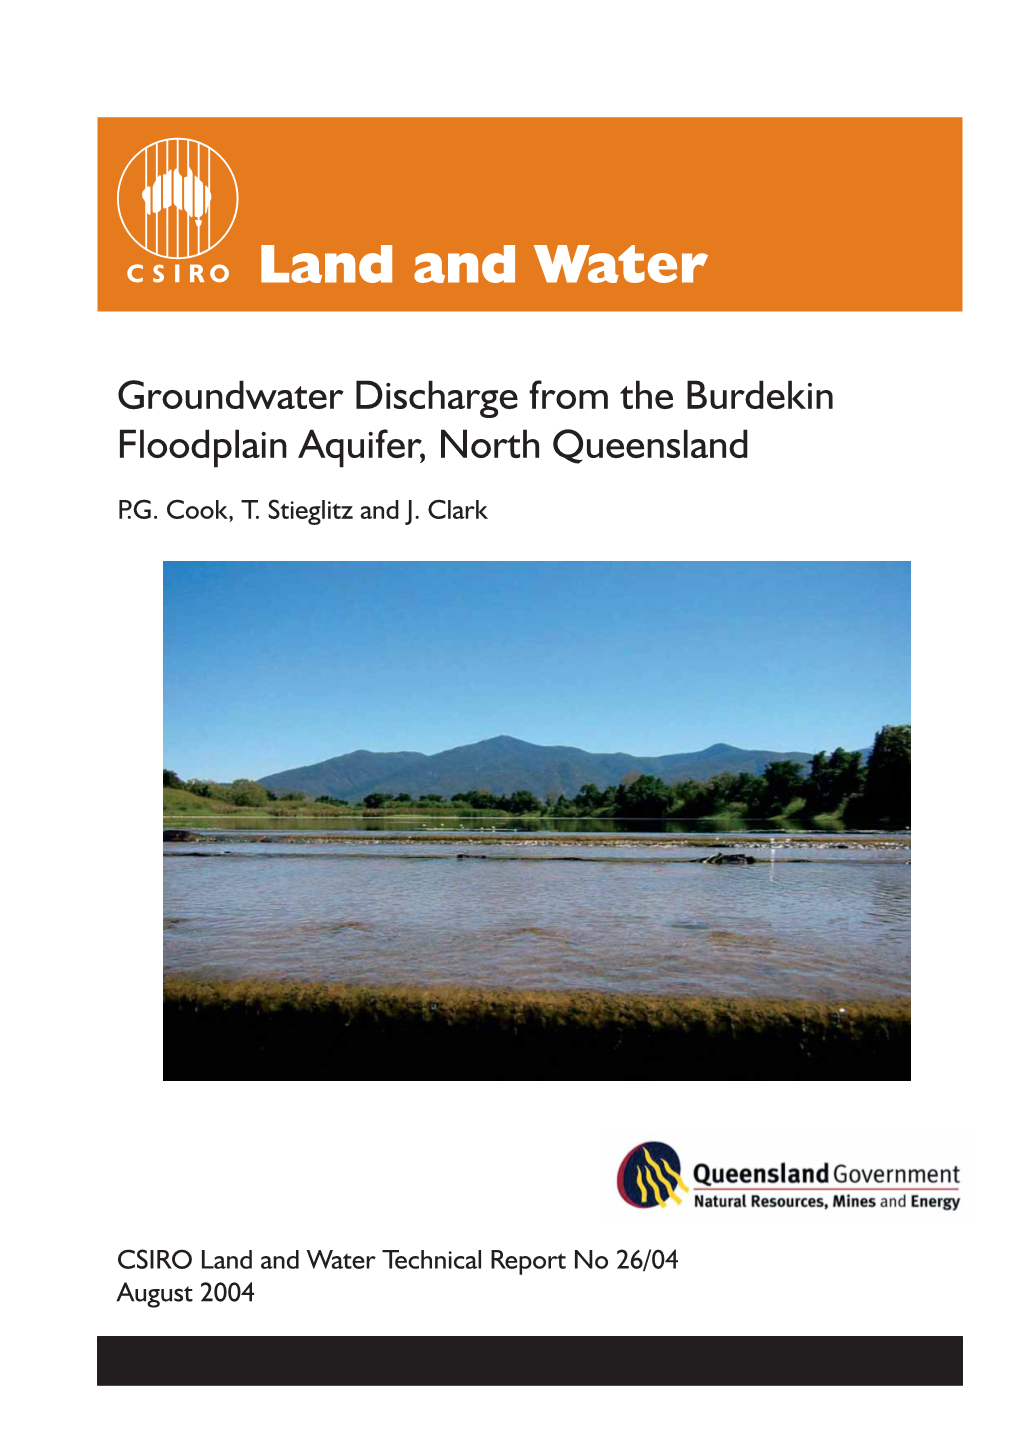 Groundwater Discharge from the Burdekin Floodplain Aquifer North